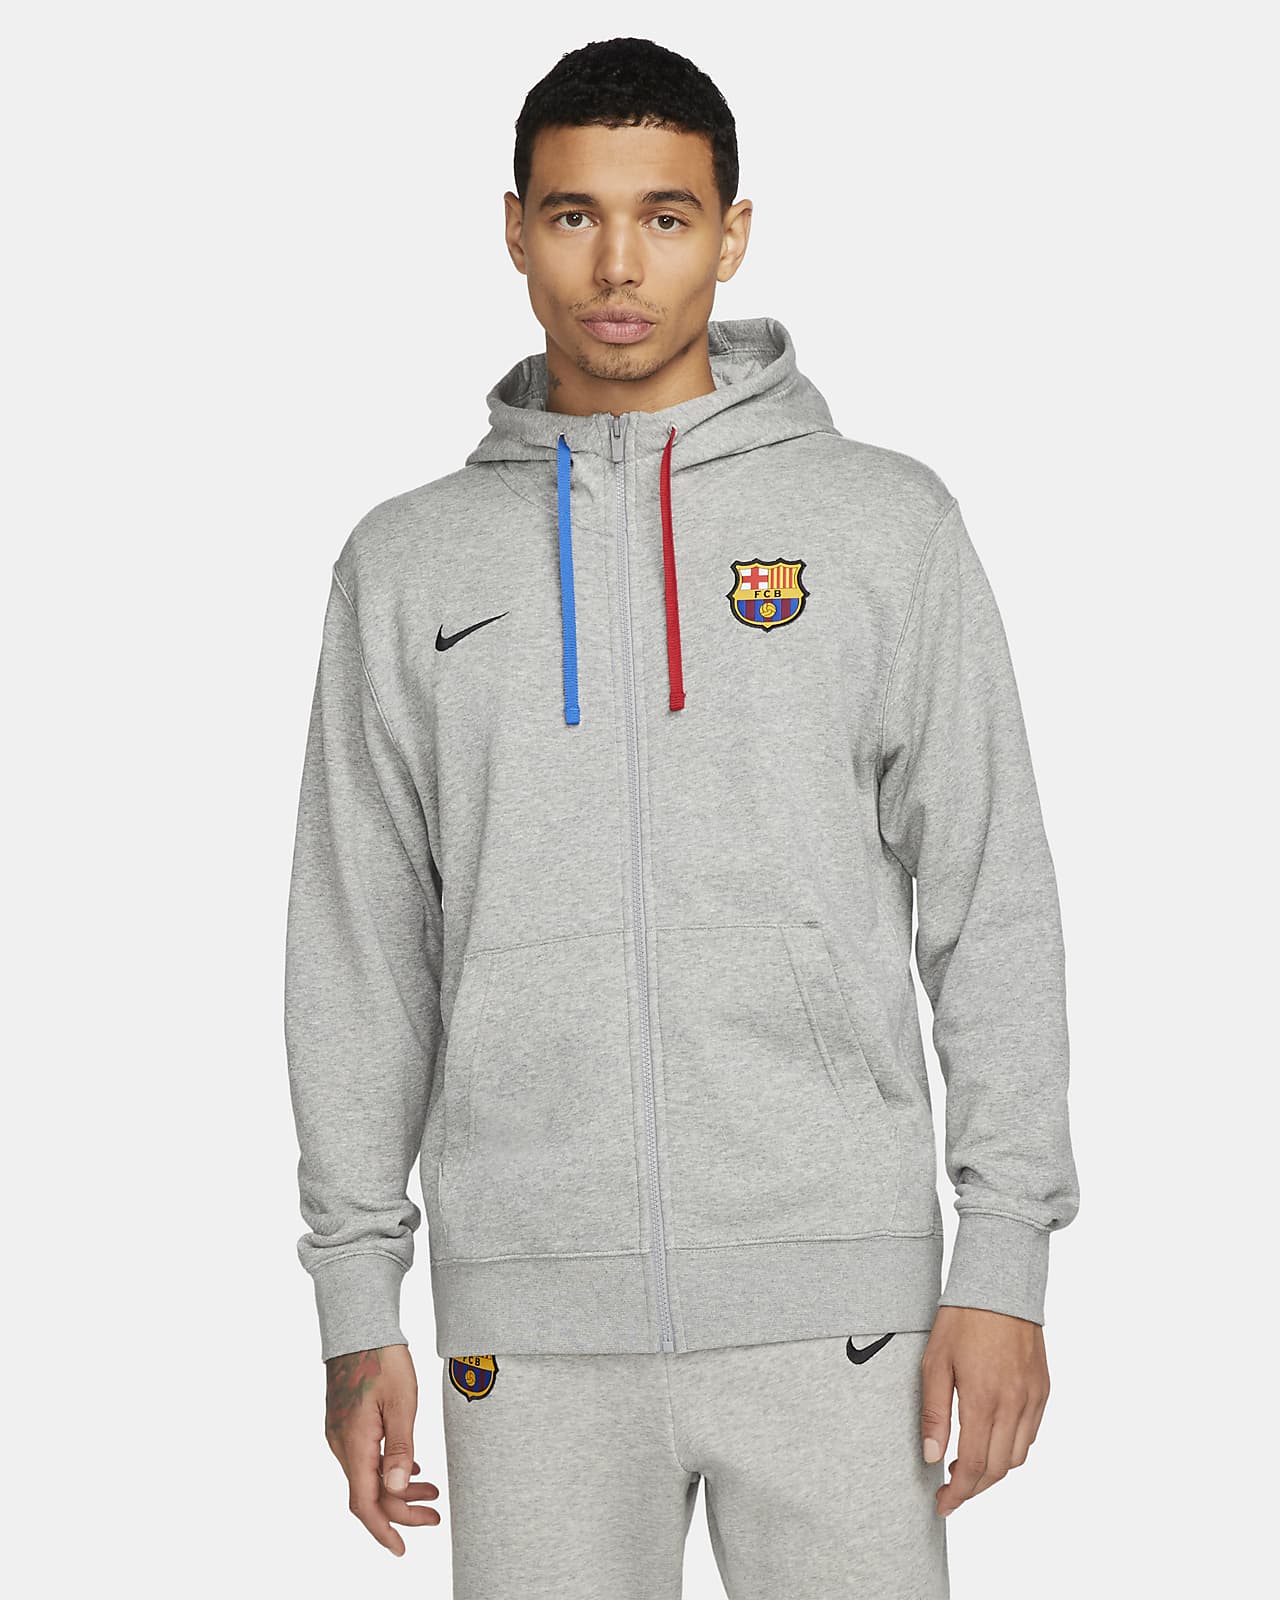 Barcelona Fleece Men's Full-Zip Hoodie. Nike SA